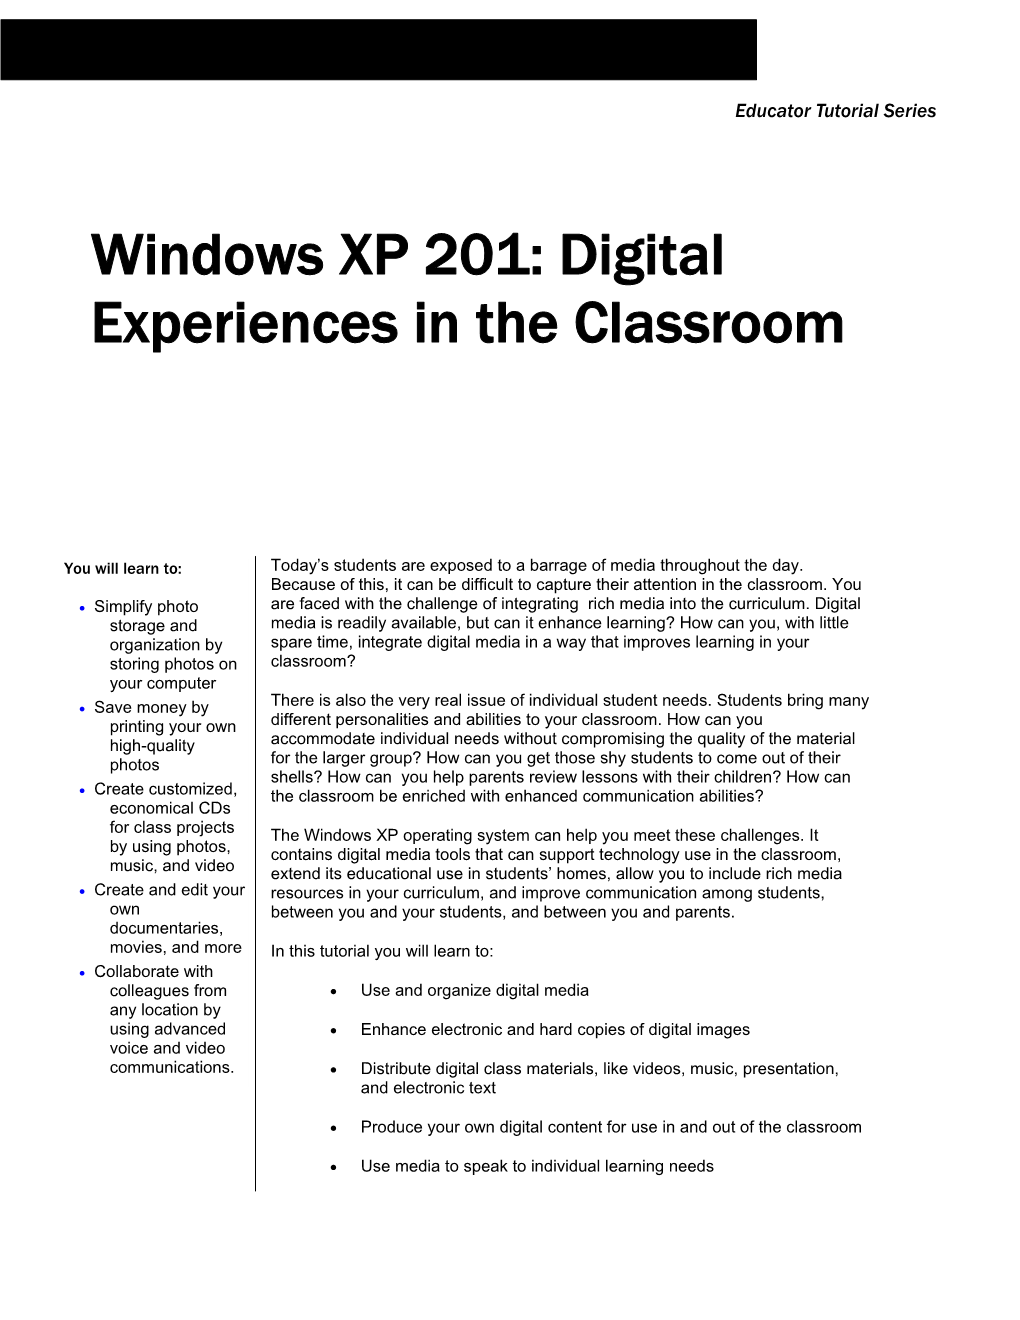 Windows XP 201: Digital Experiences in the Classroom